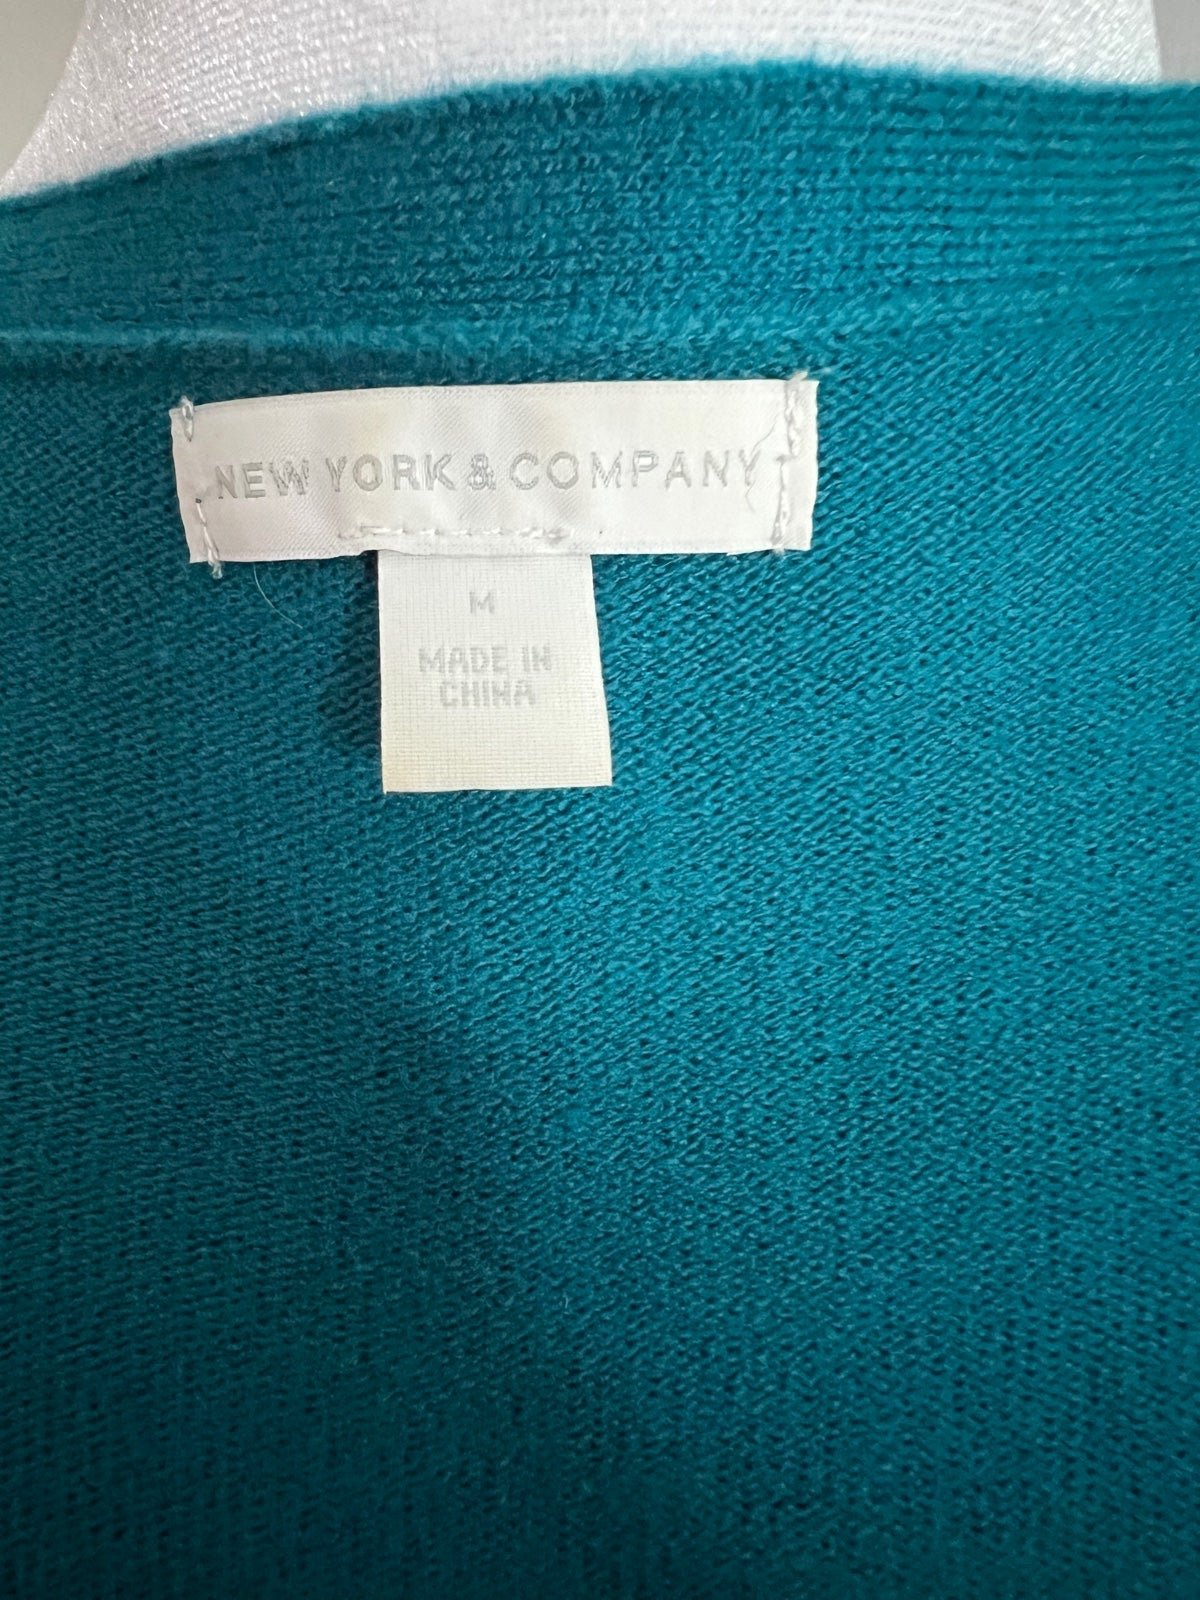 good price New York & company sweater lmQNXqPdA just for you